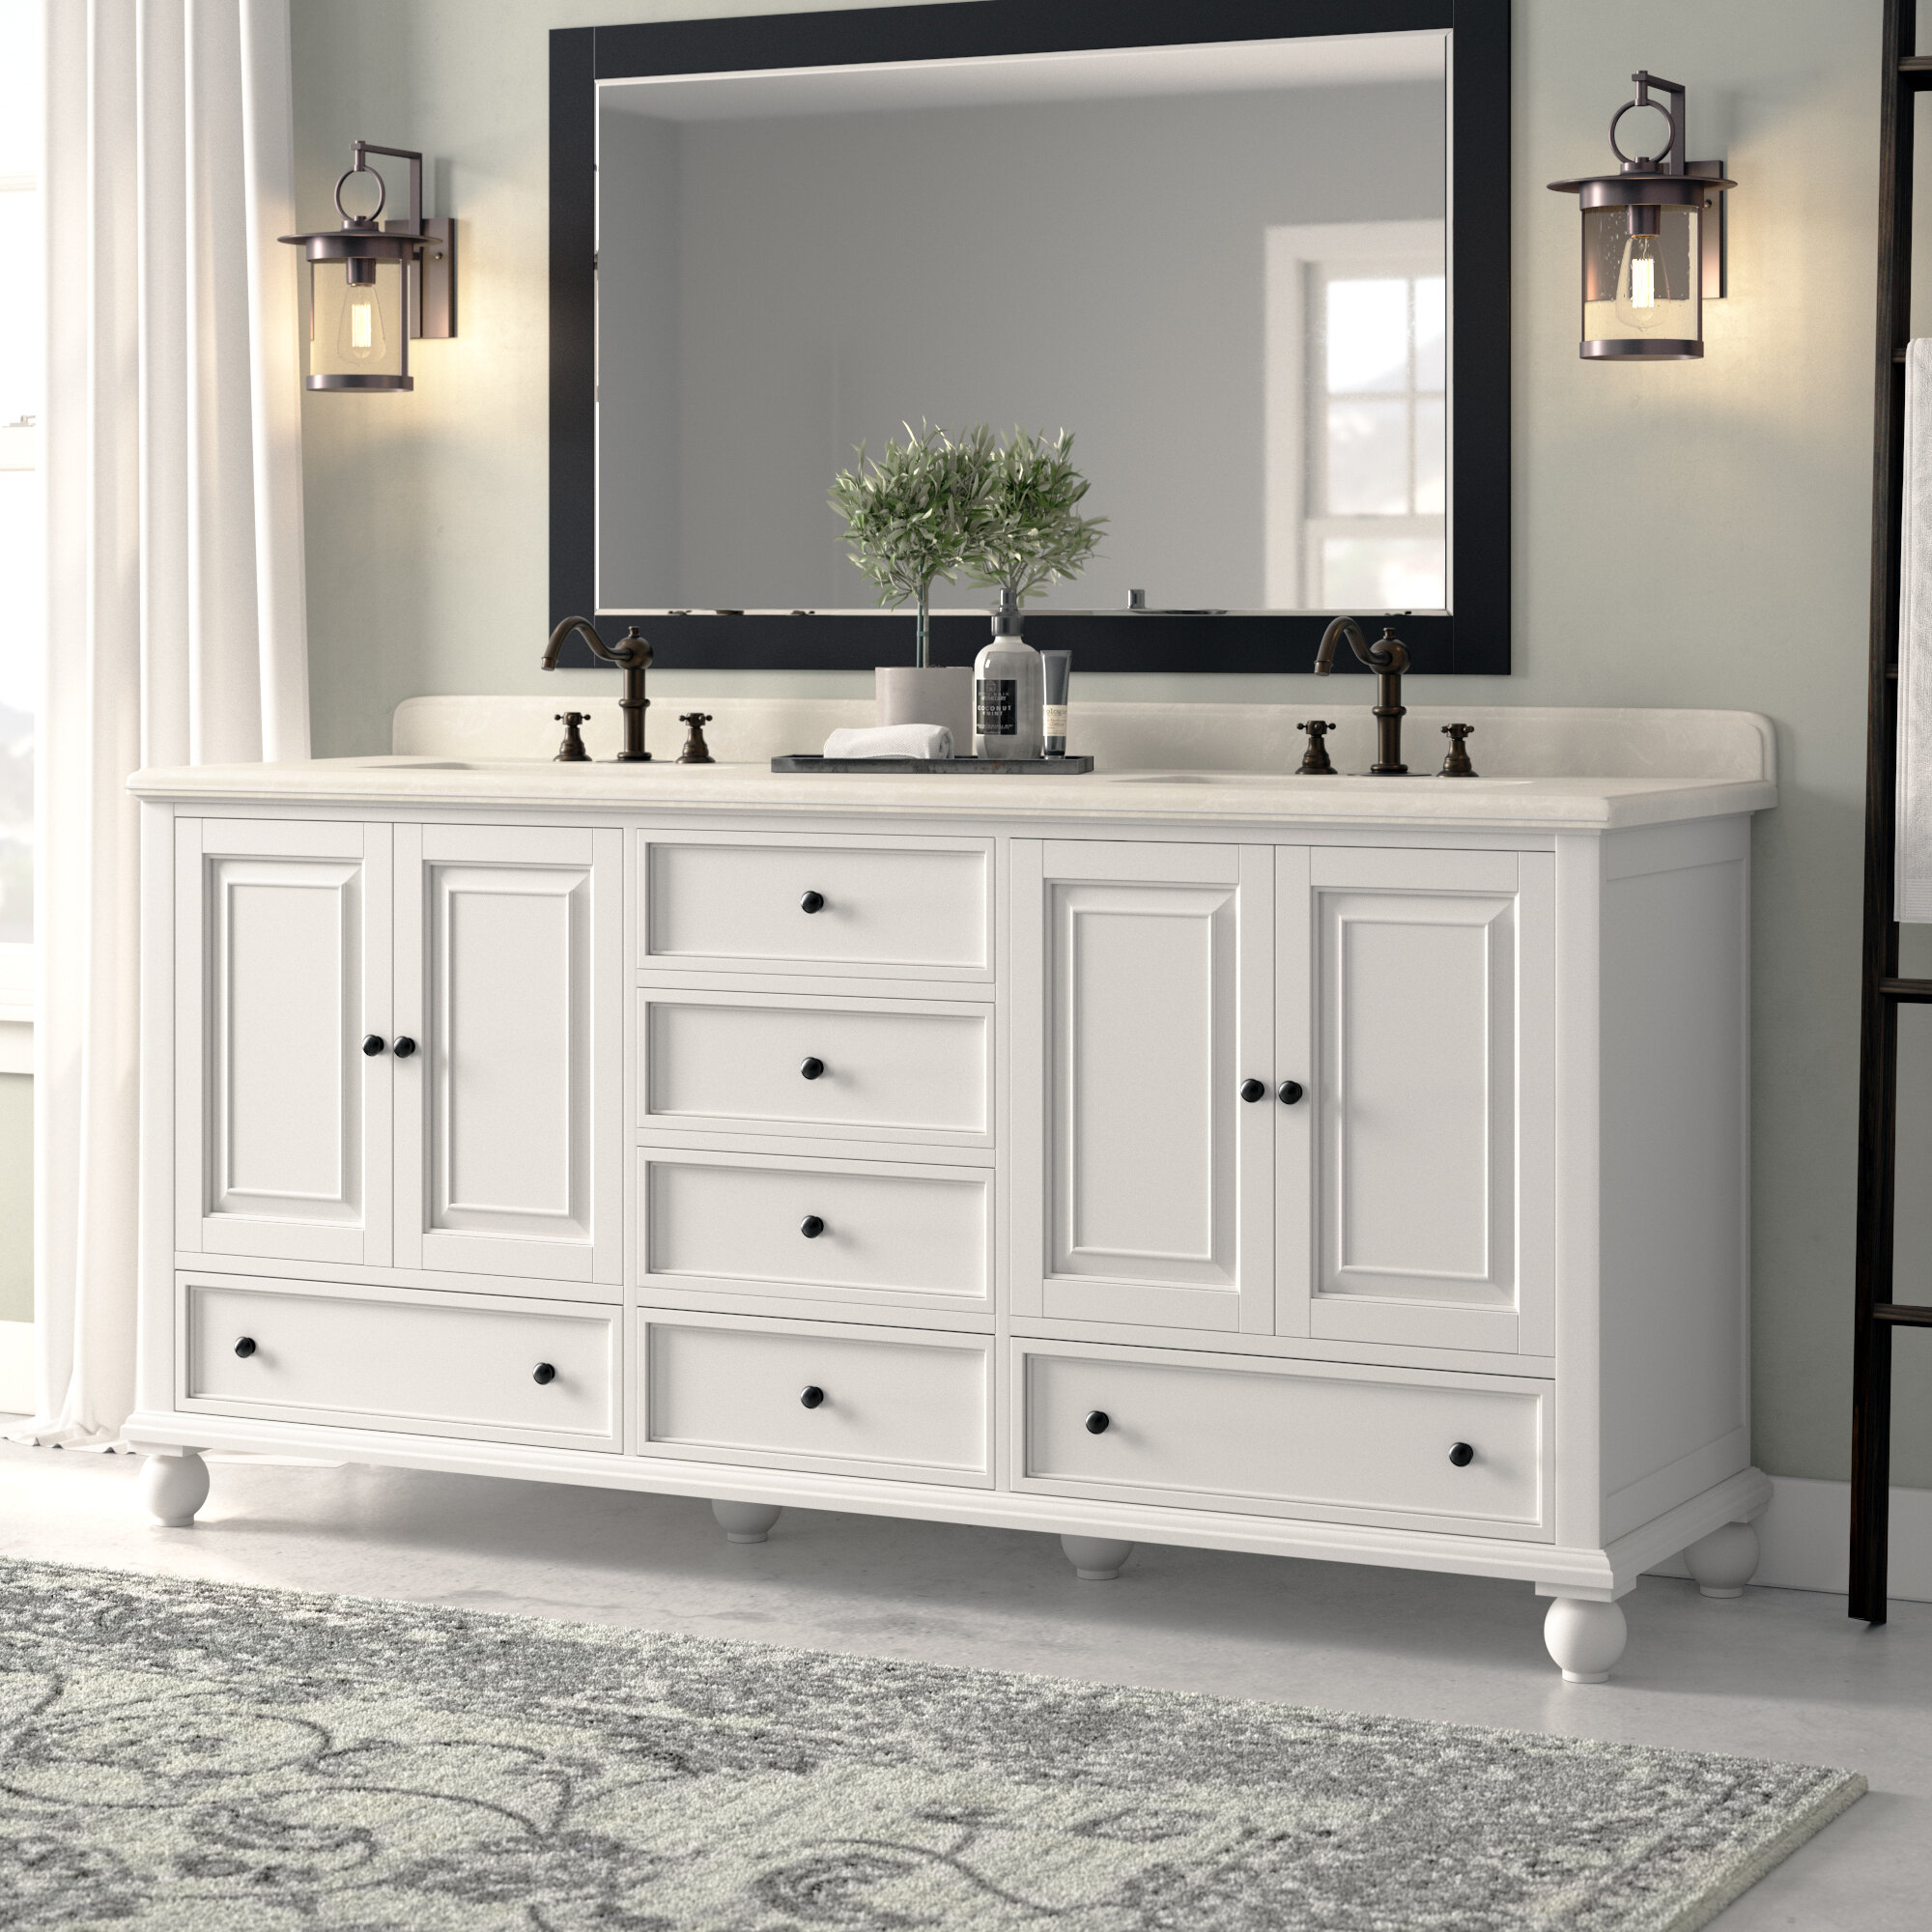 Gracie Oaks Samoset 72 Double Bathroom Vanity Base Only Reviews